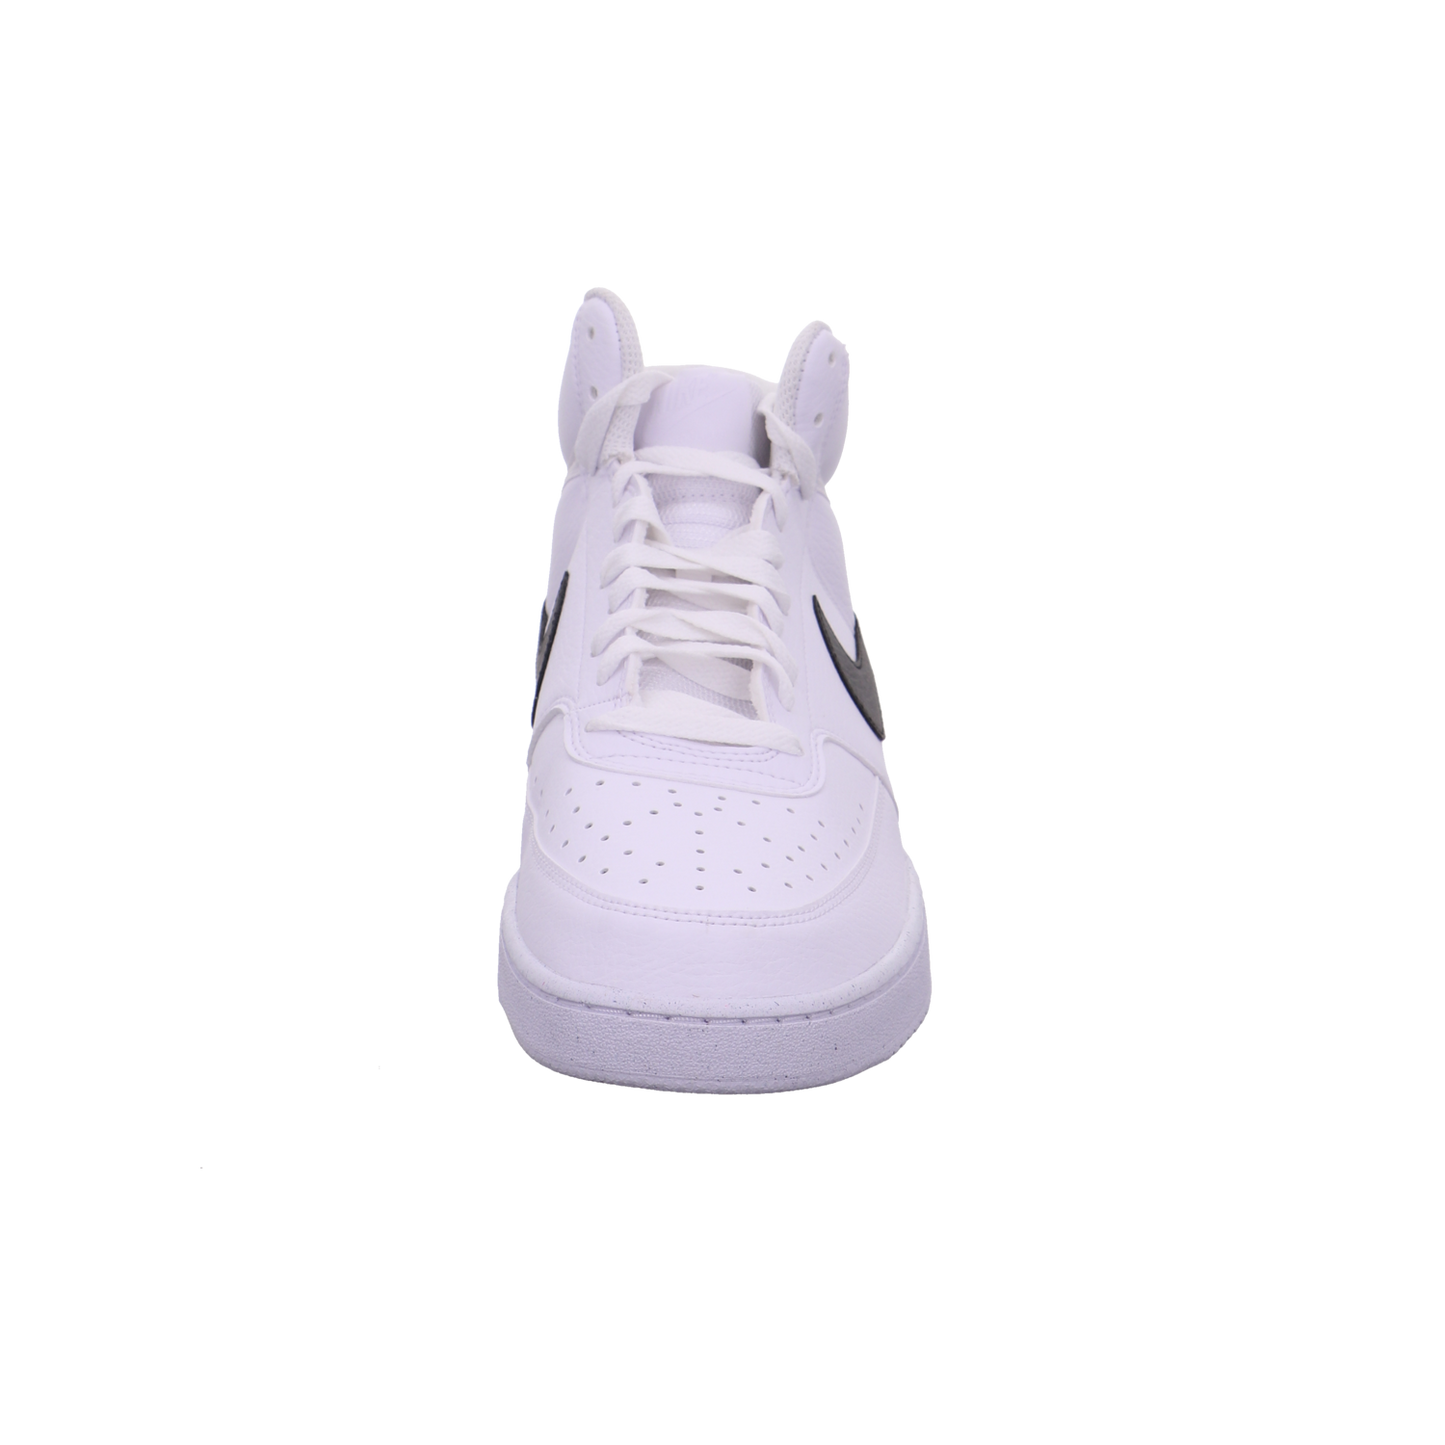 Nike Sneaker weiß-schwarz Bild3